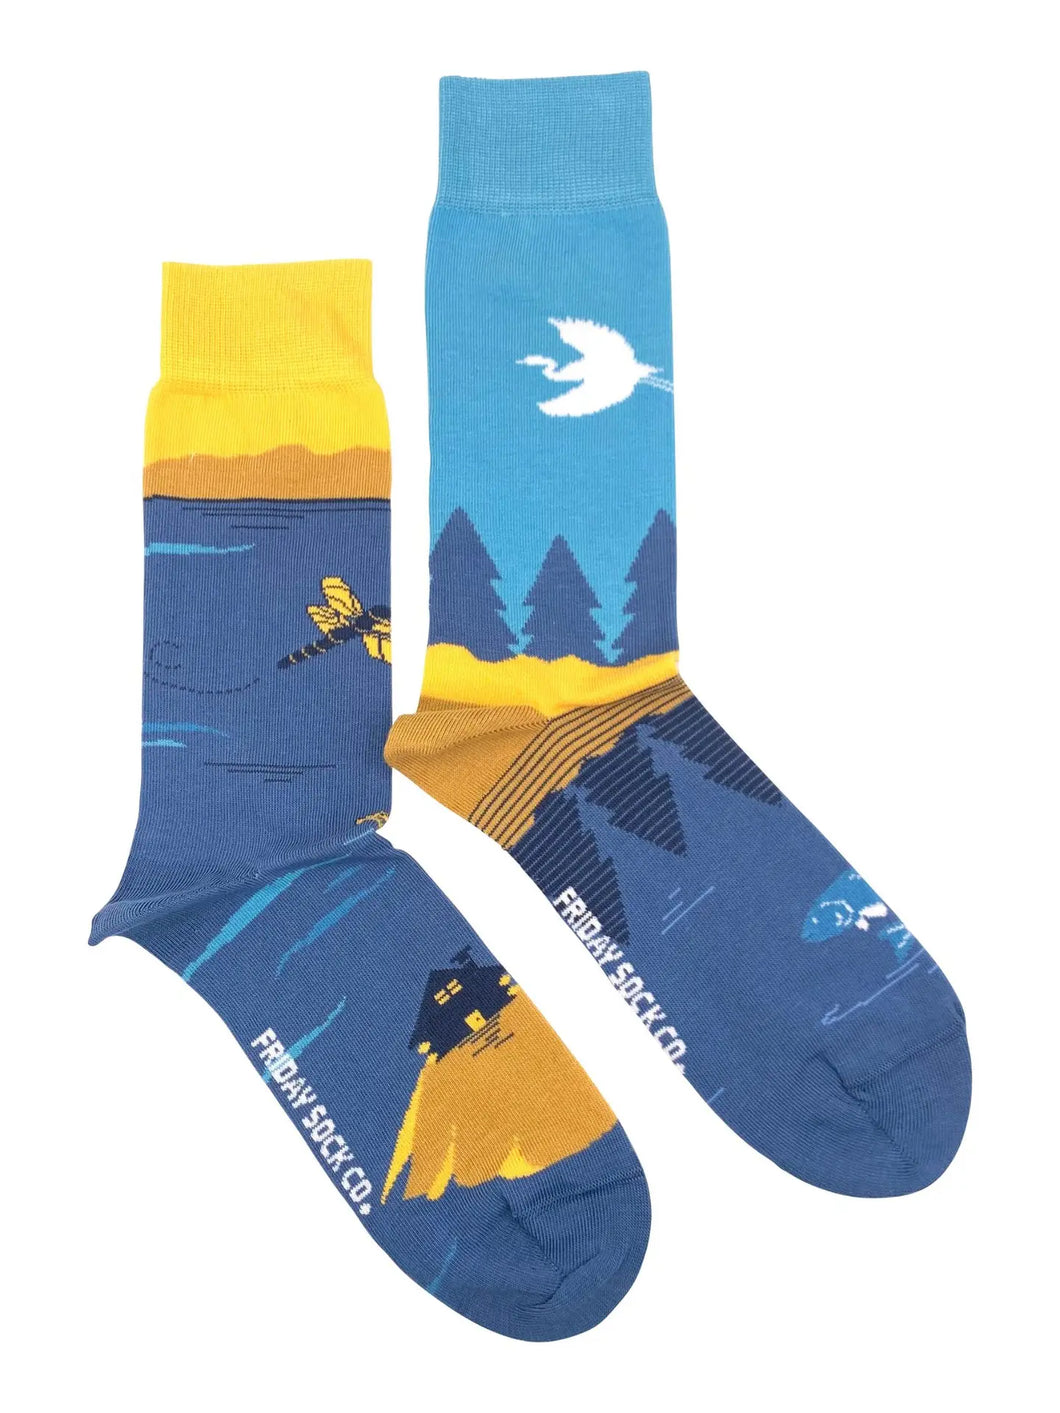 men's socks - Canadian landscape -  Great Lakes